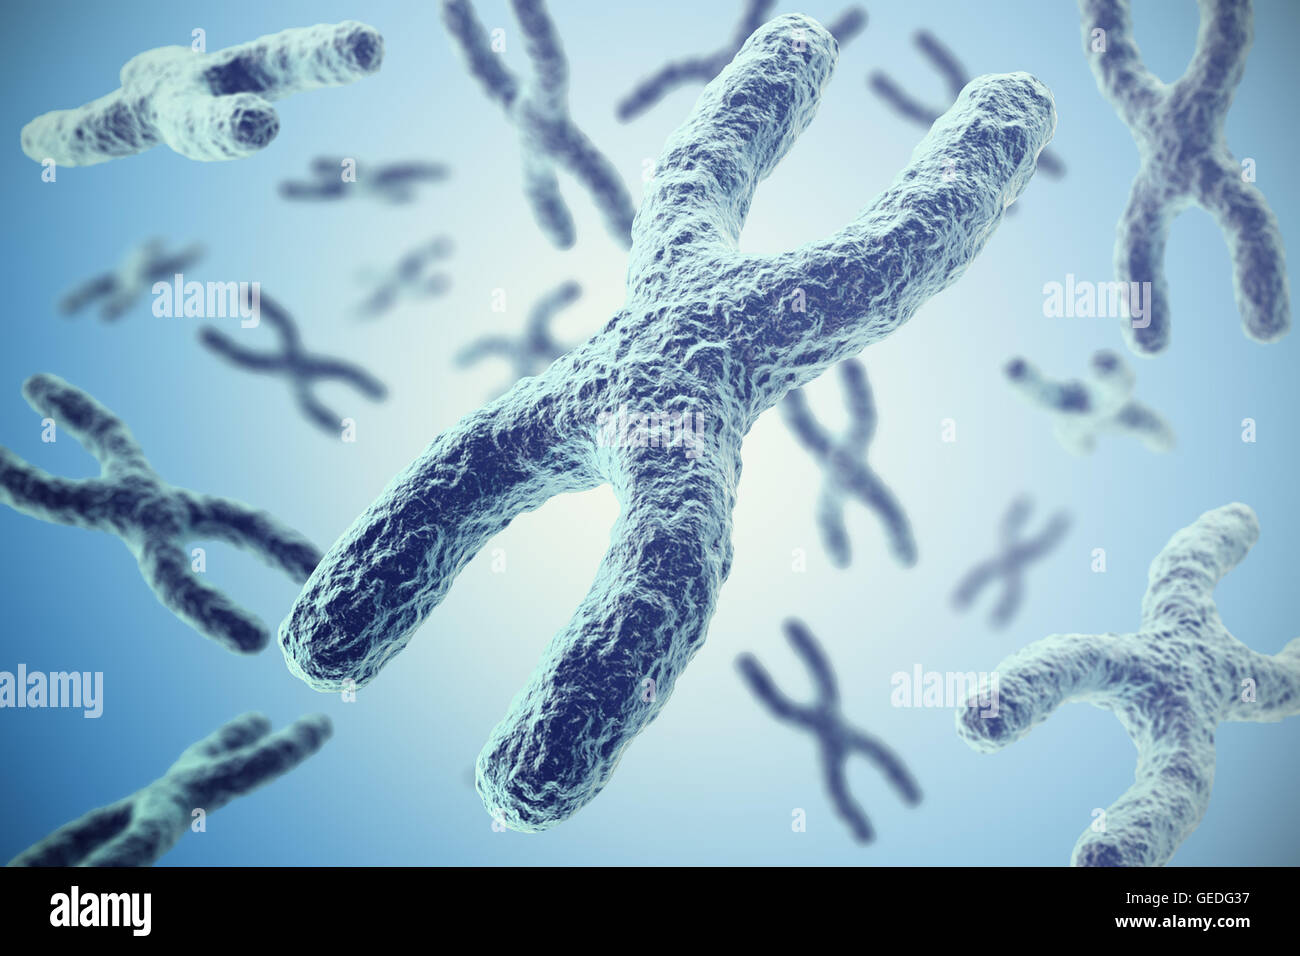 Chromosomes on blue background, scientific concept 3d illustration Stock Photo